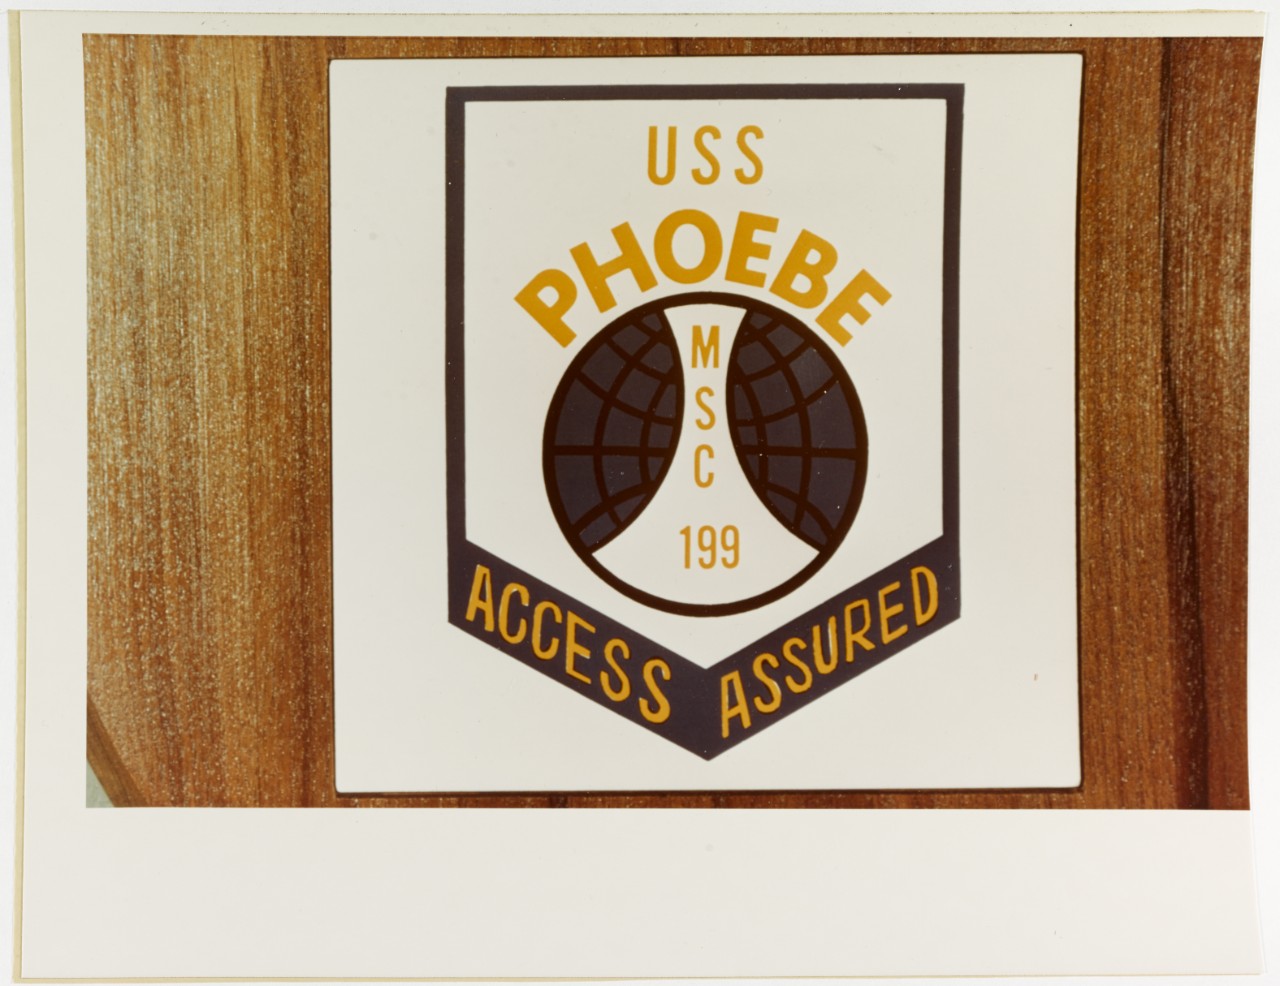 Insignia:  USS PHOEBE (MSC-199)